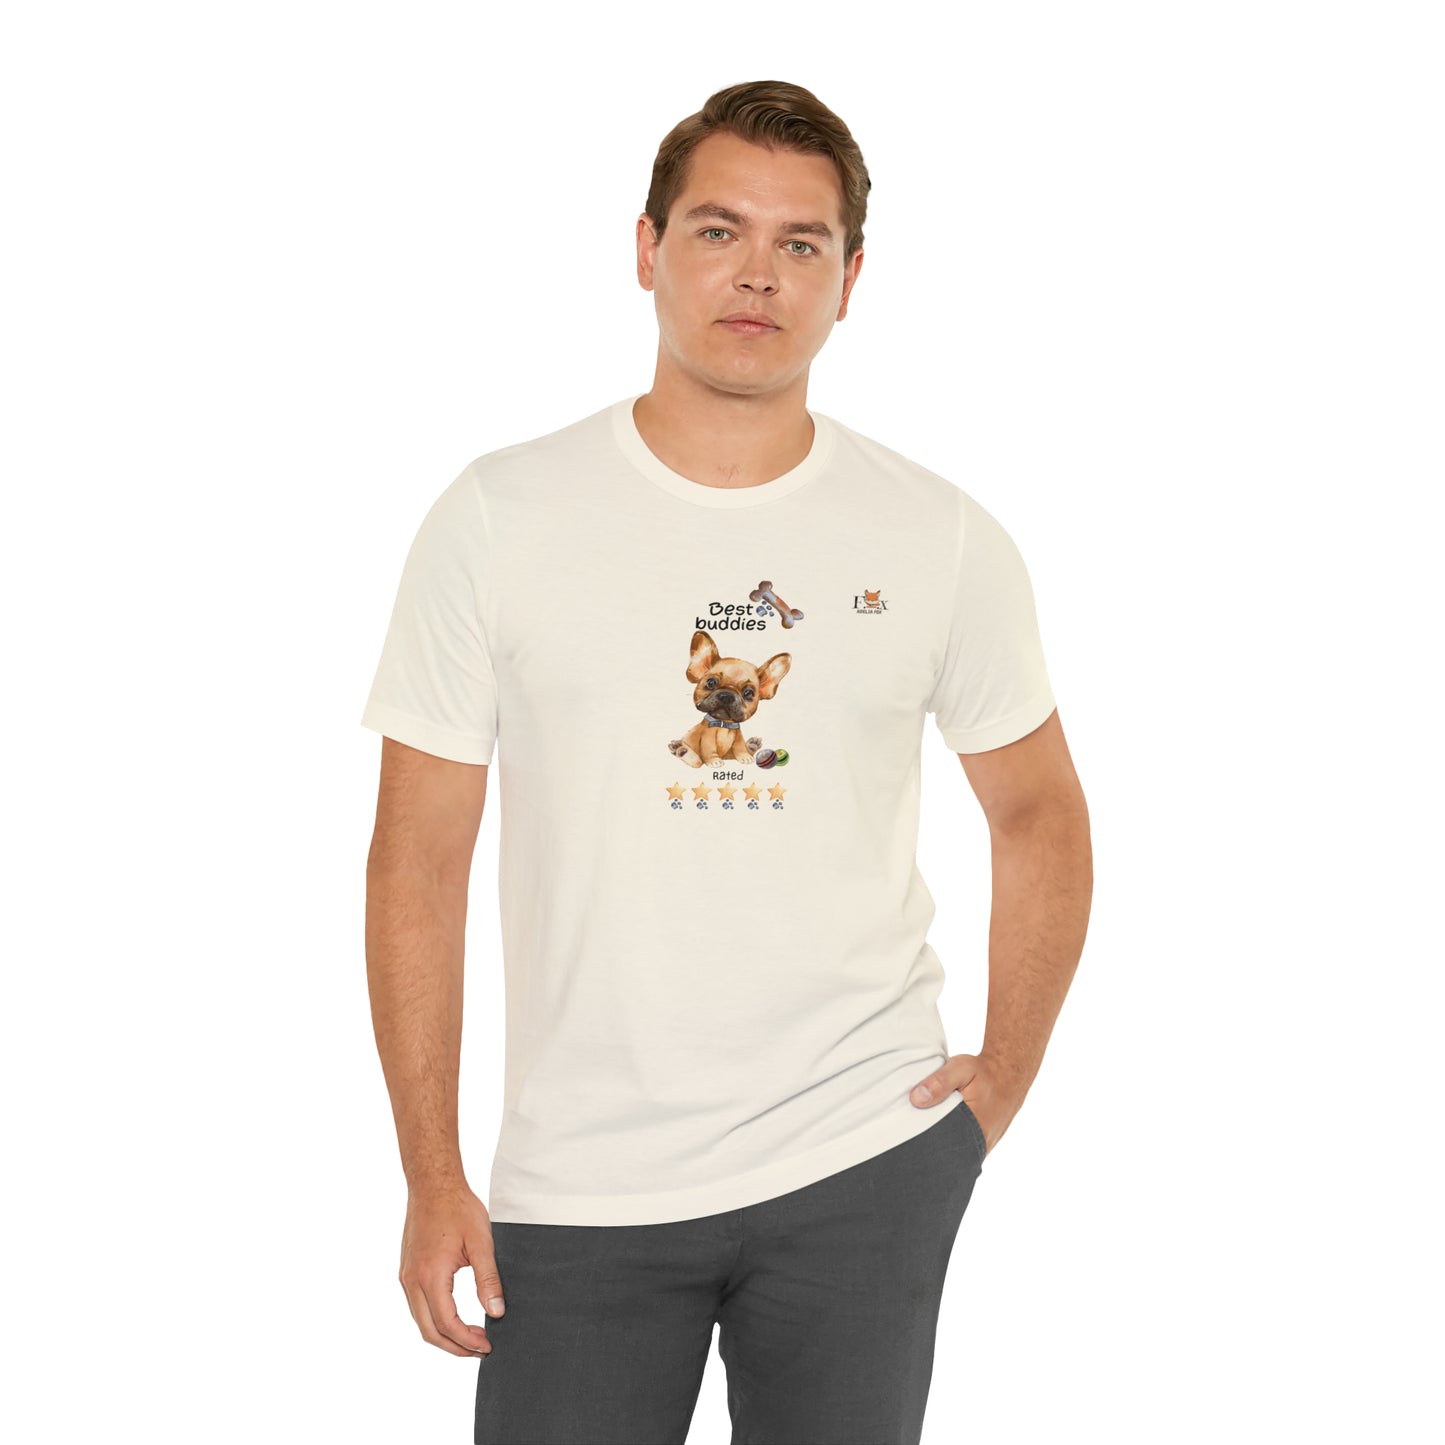 Best Buddies 5 stars & 5 paws - French Bulldog  Unisex T-Shirt